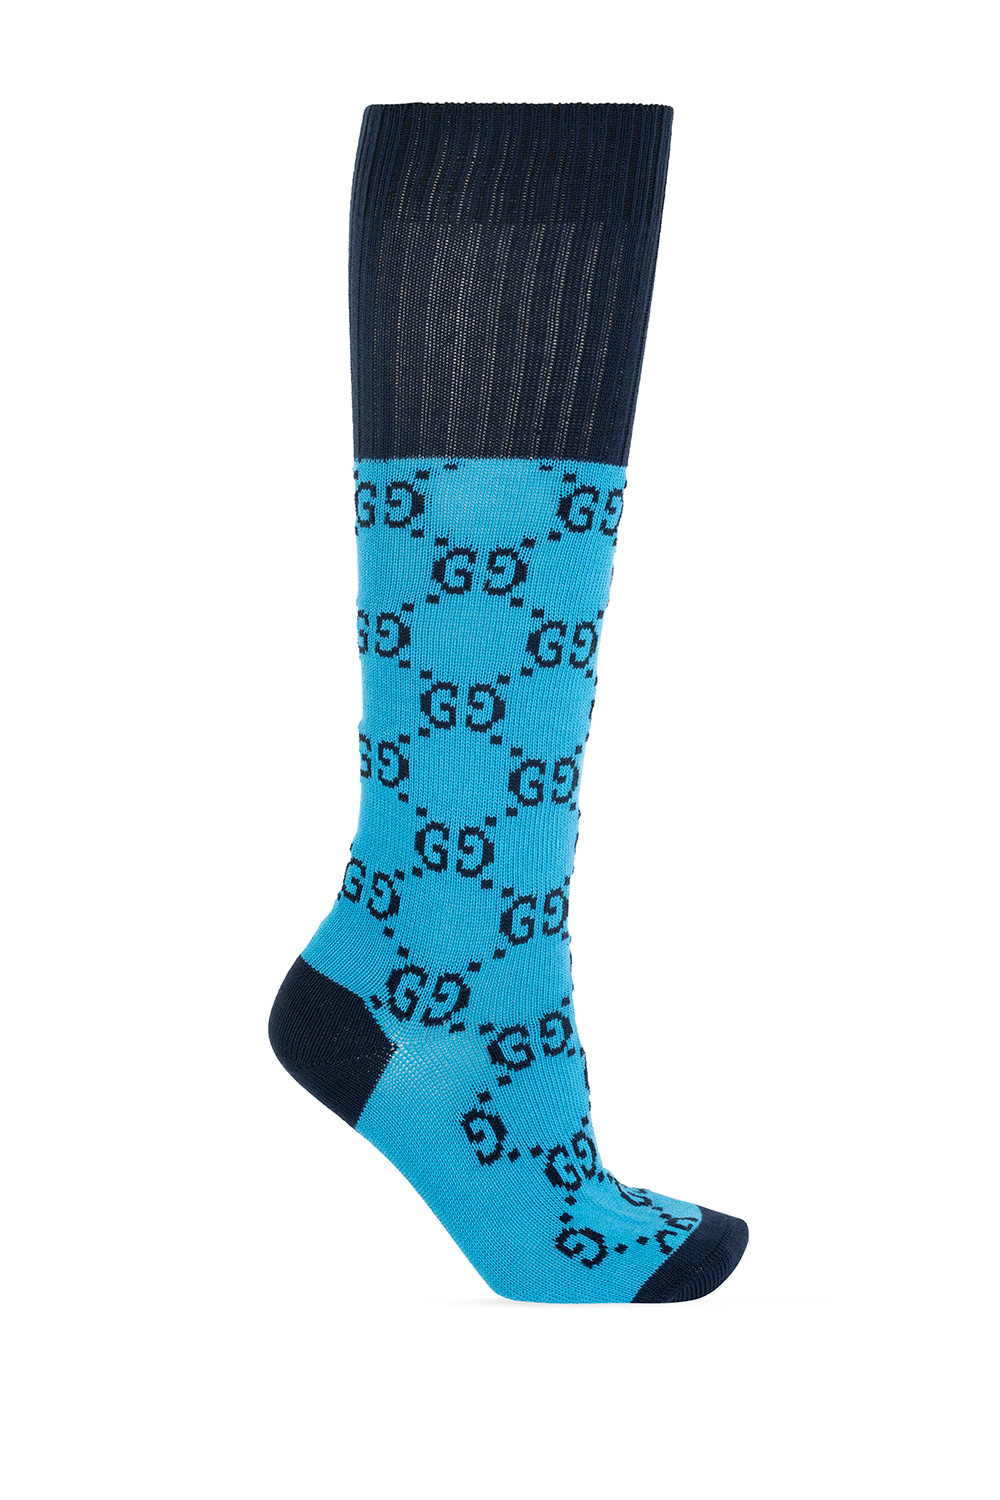 Socks logo Gucci -